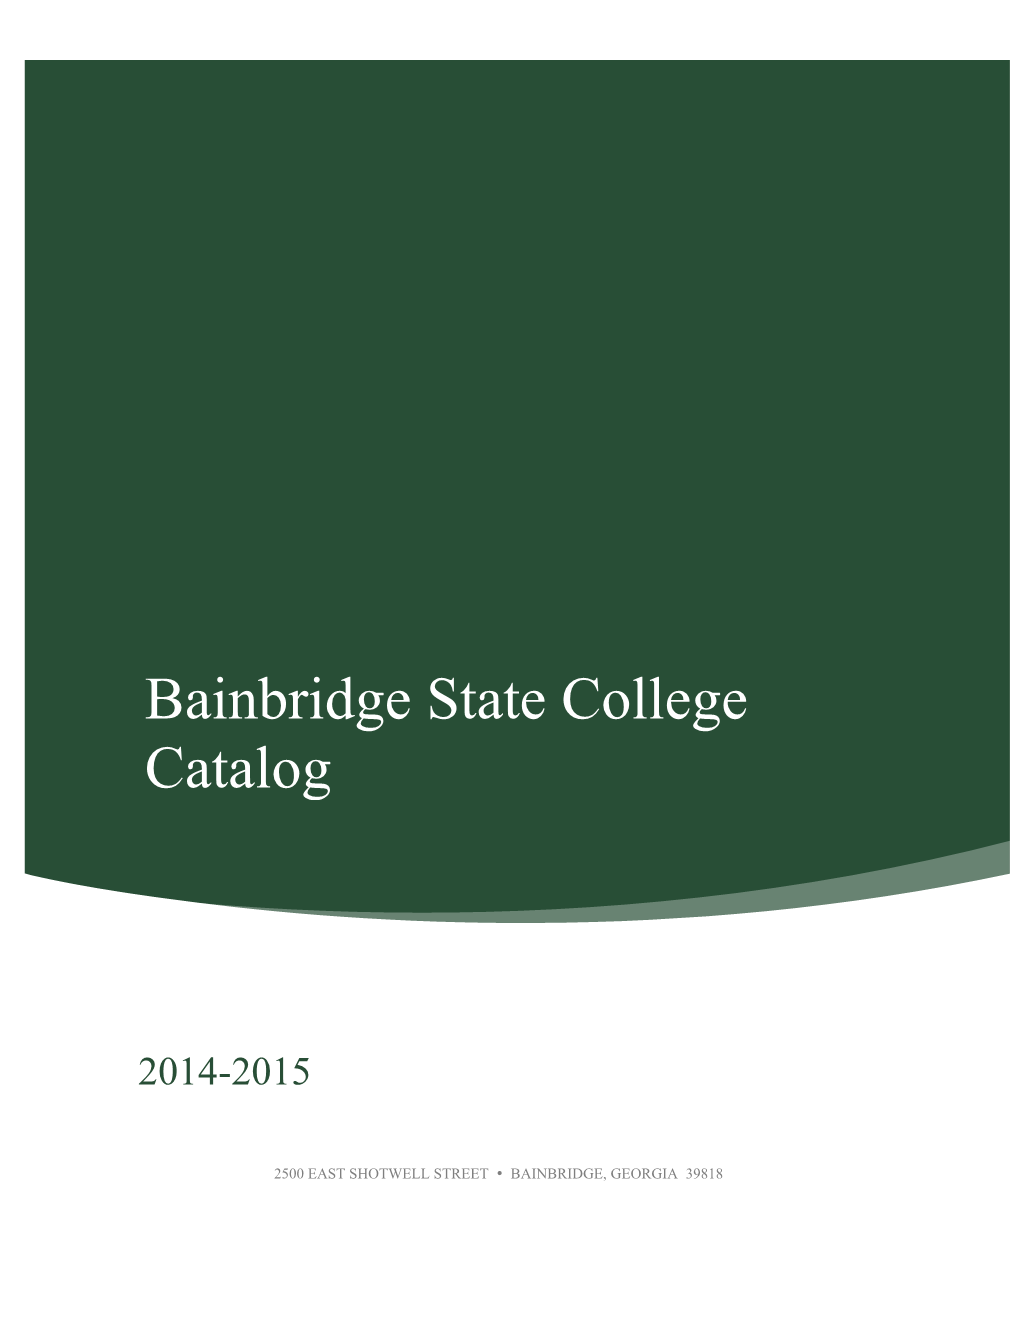 Bainbridge State College Catalog